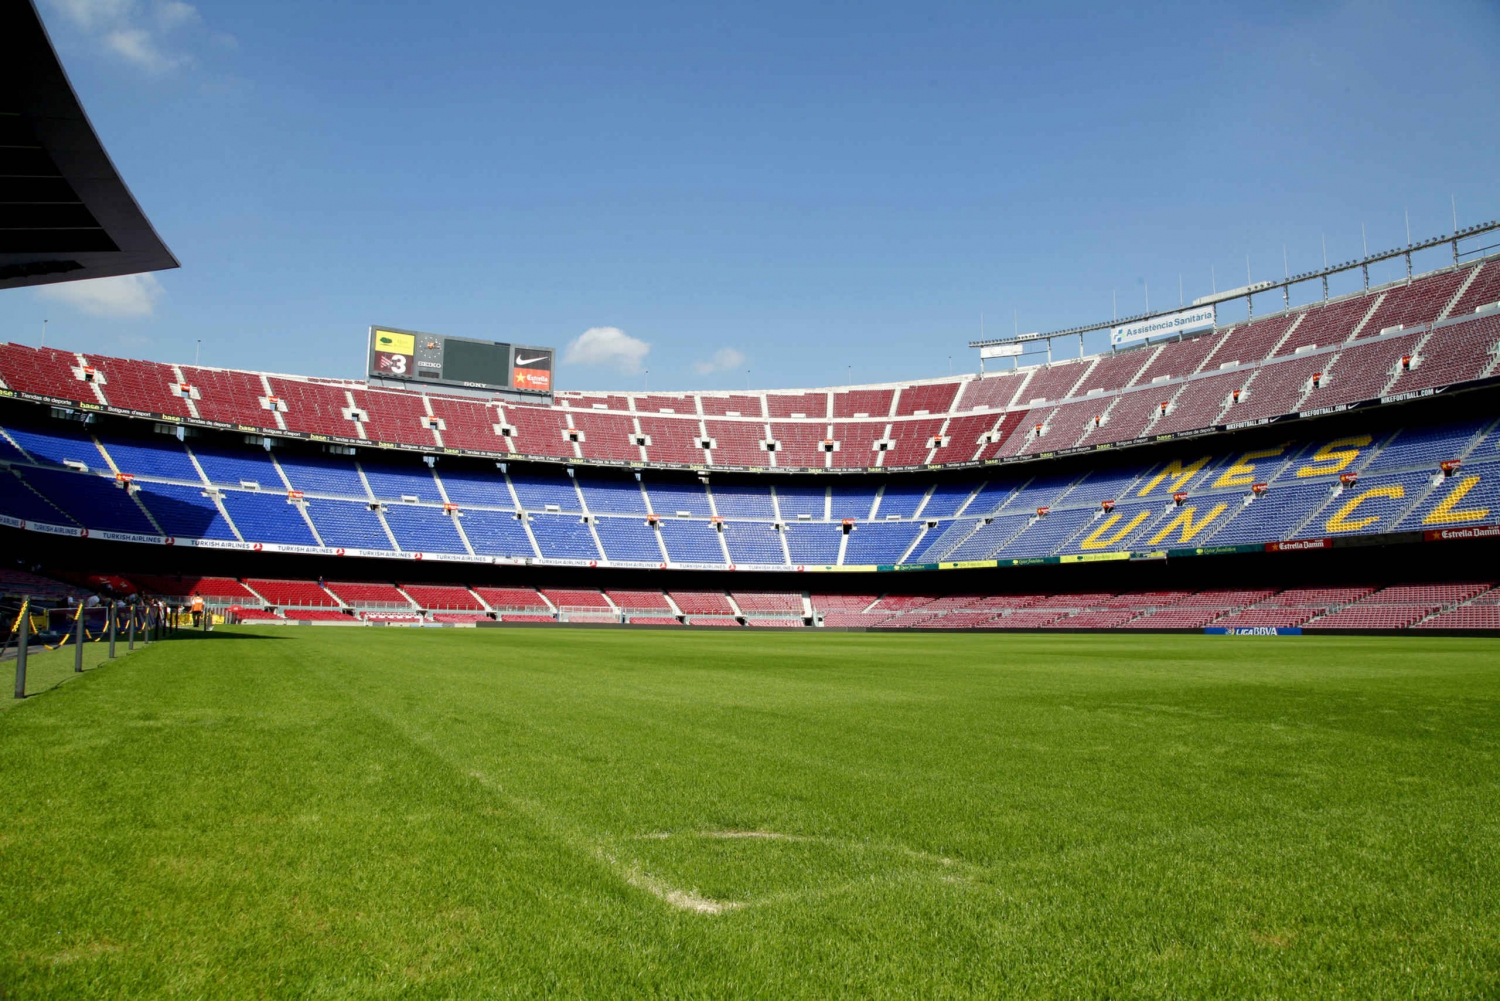 Какой сейчас стадион. Стадион ФК Барселона. Камп ноу стадион. Барселона Камп ноу. Стадион Camp nou FC Barcelona.